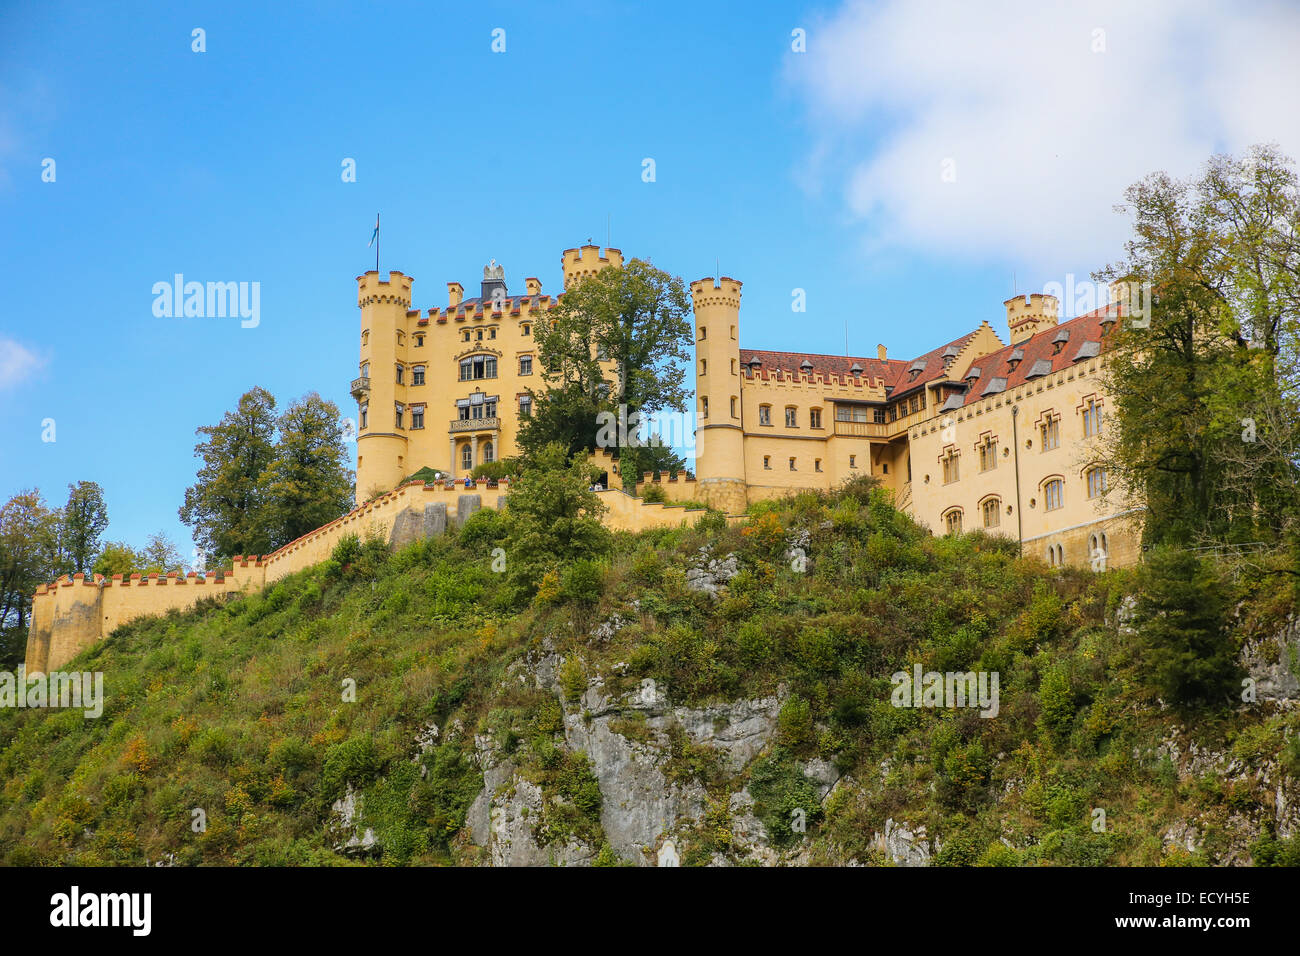 Fort near Neuschwanstein castle yellow landmark traditional German building blue sky Stock Photo